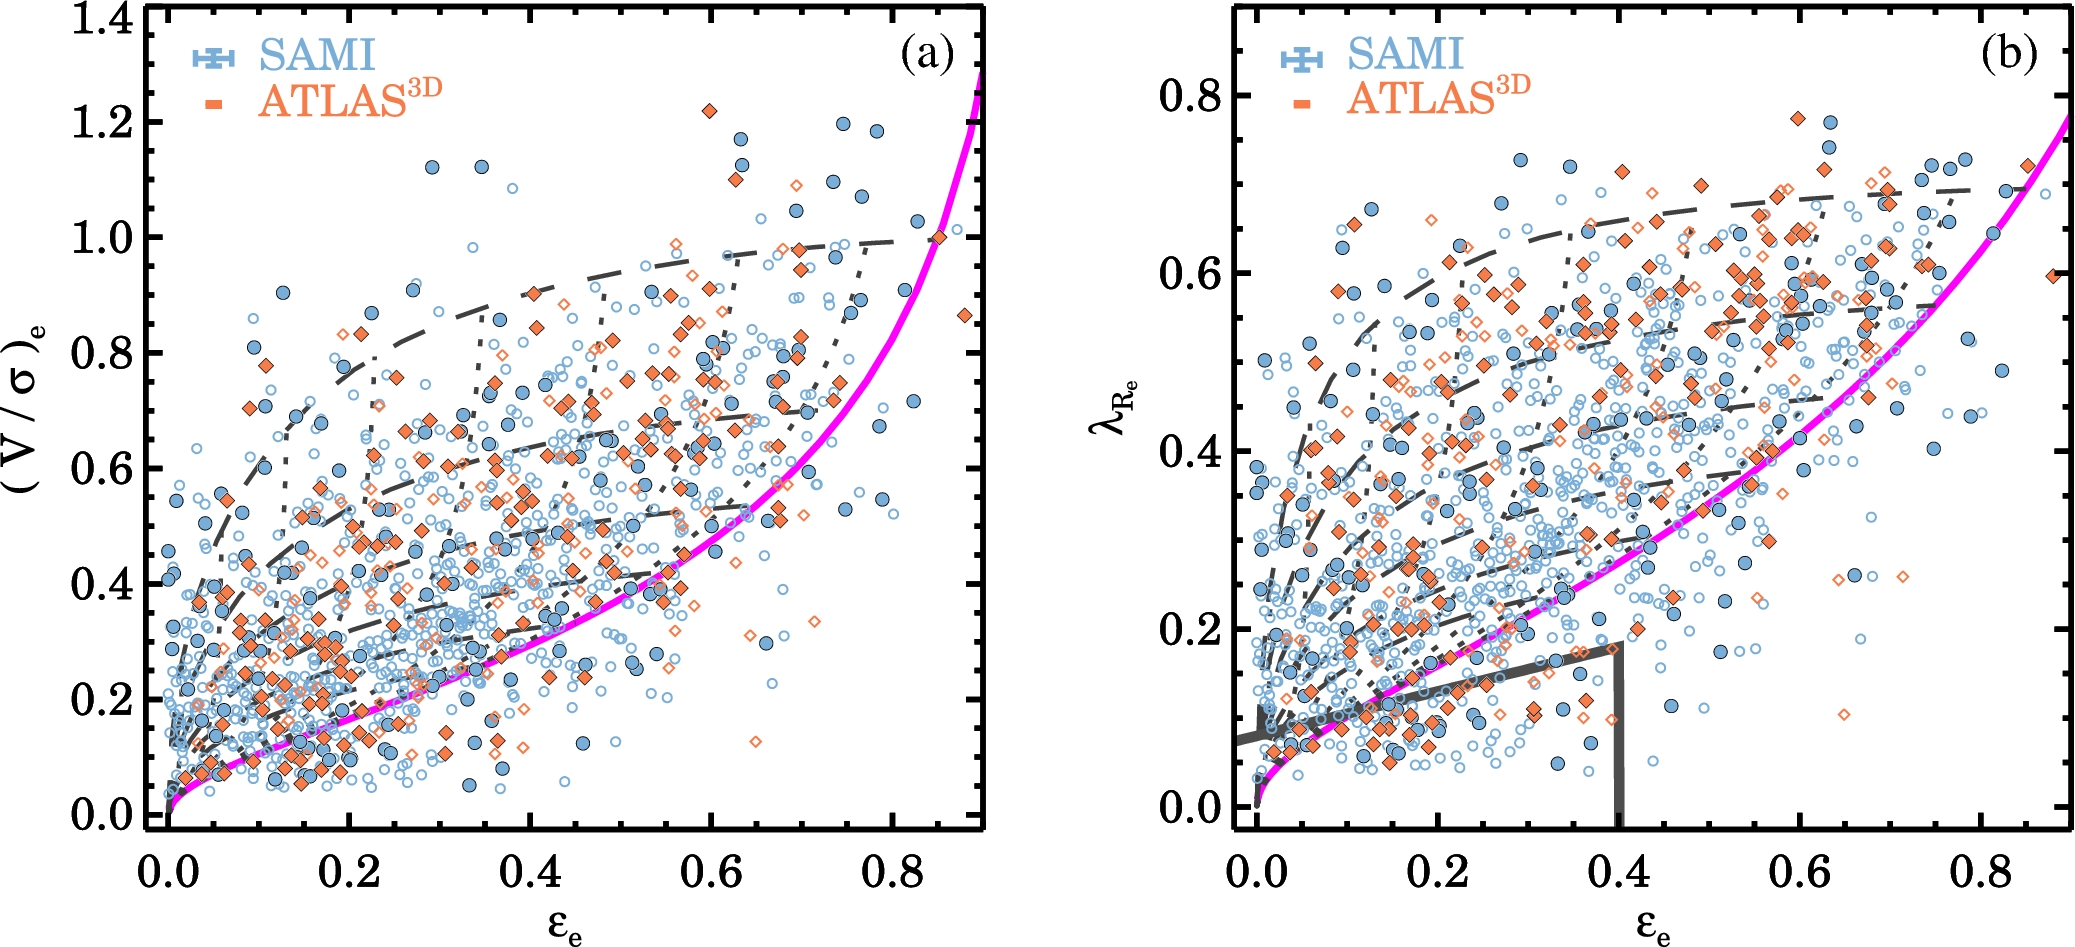 Fig. 9 from van de Sande: v/sigma vs. ellipiticity for SAMI and ATLAS3D galaxies